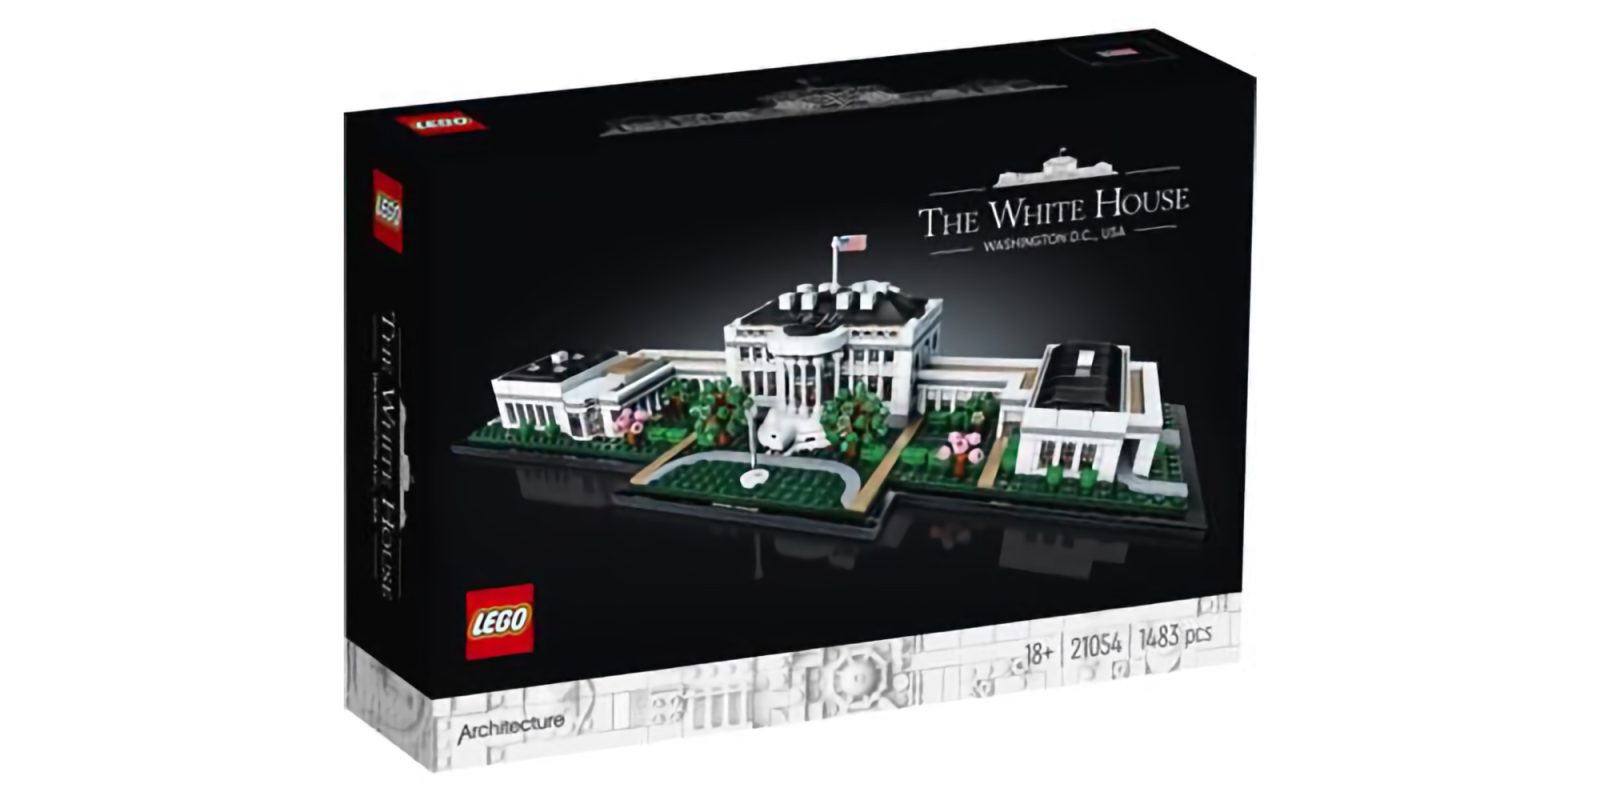 LEGO White House assembles a 1,400-piece Architecture set - 9to5Toys